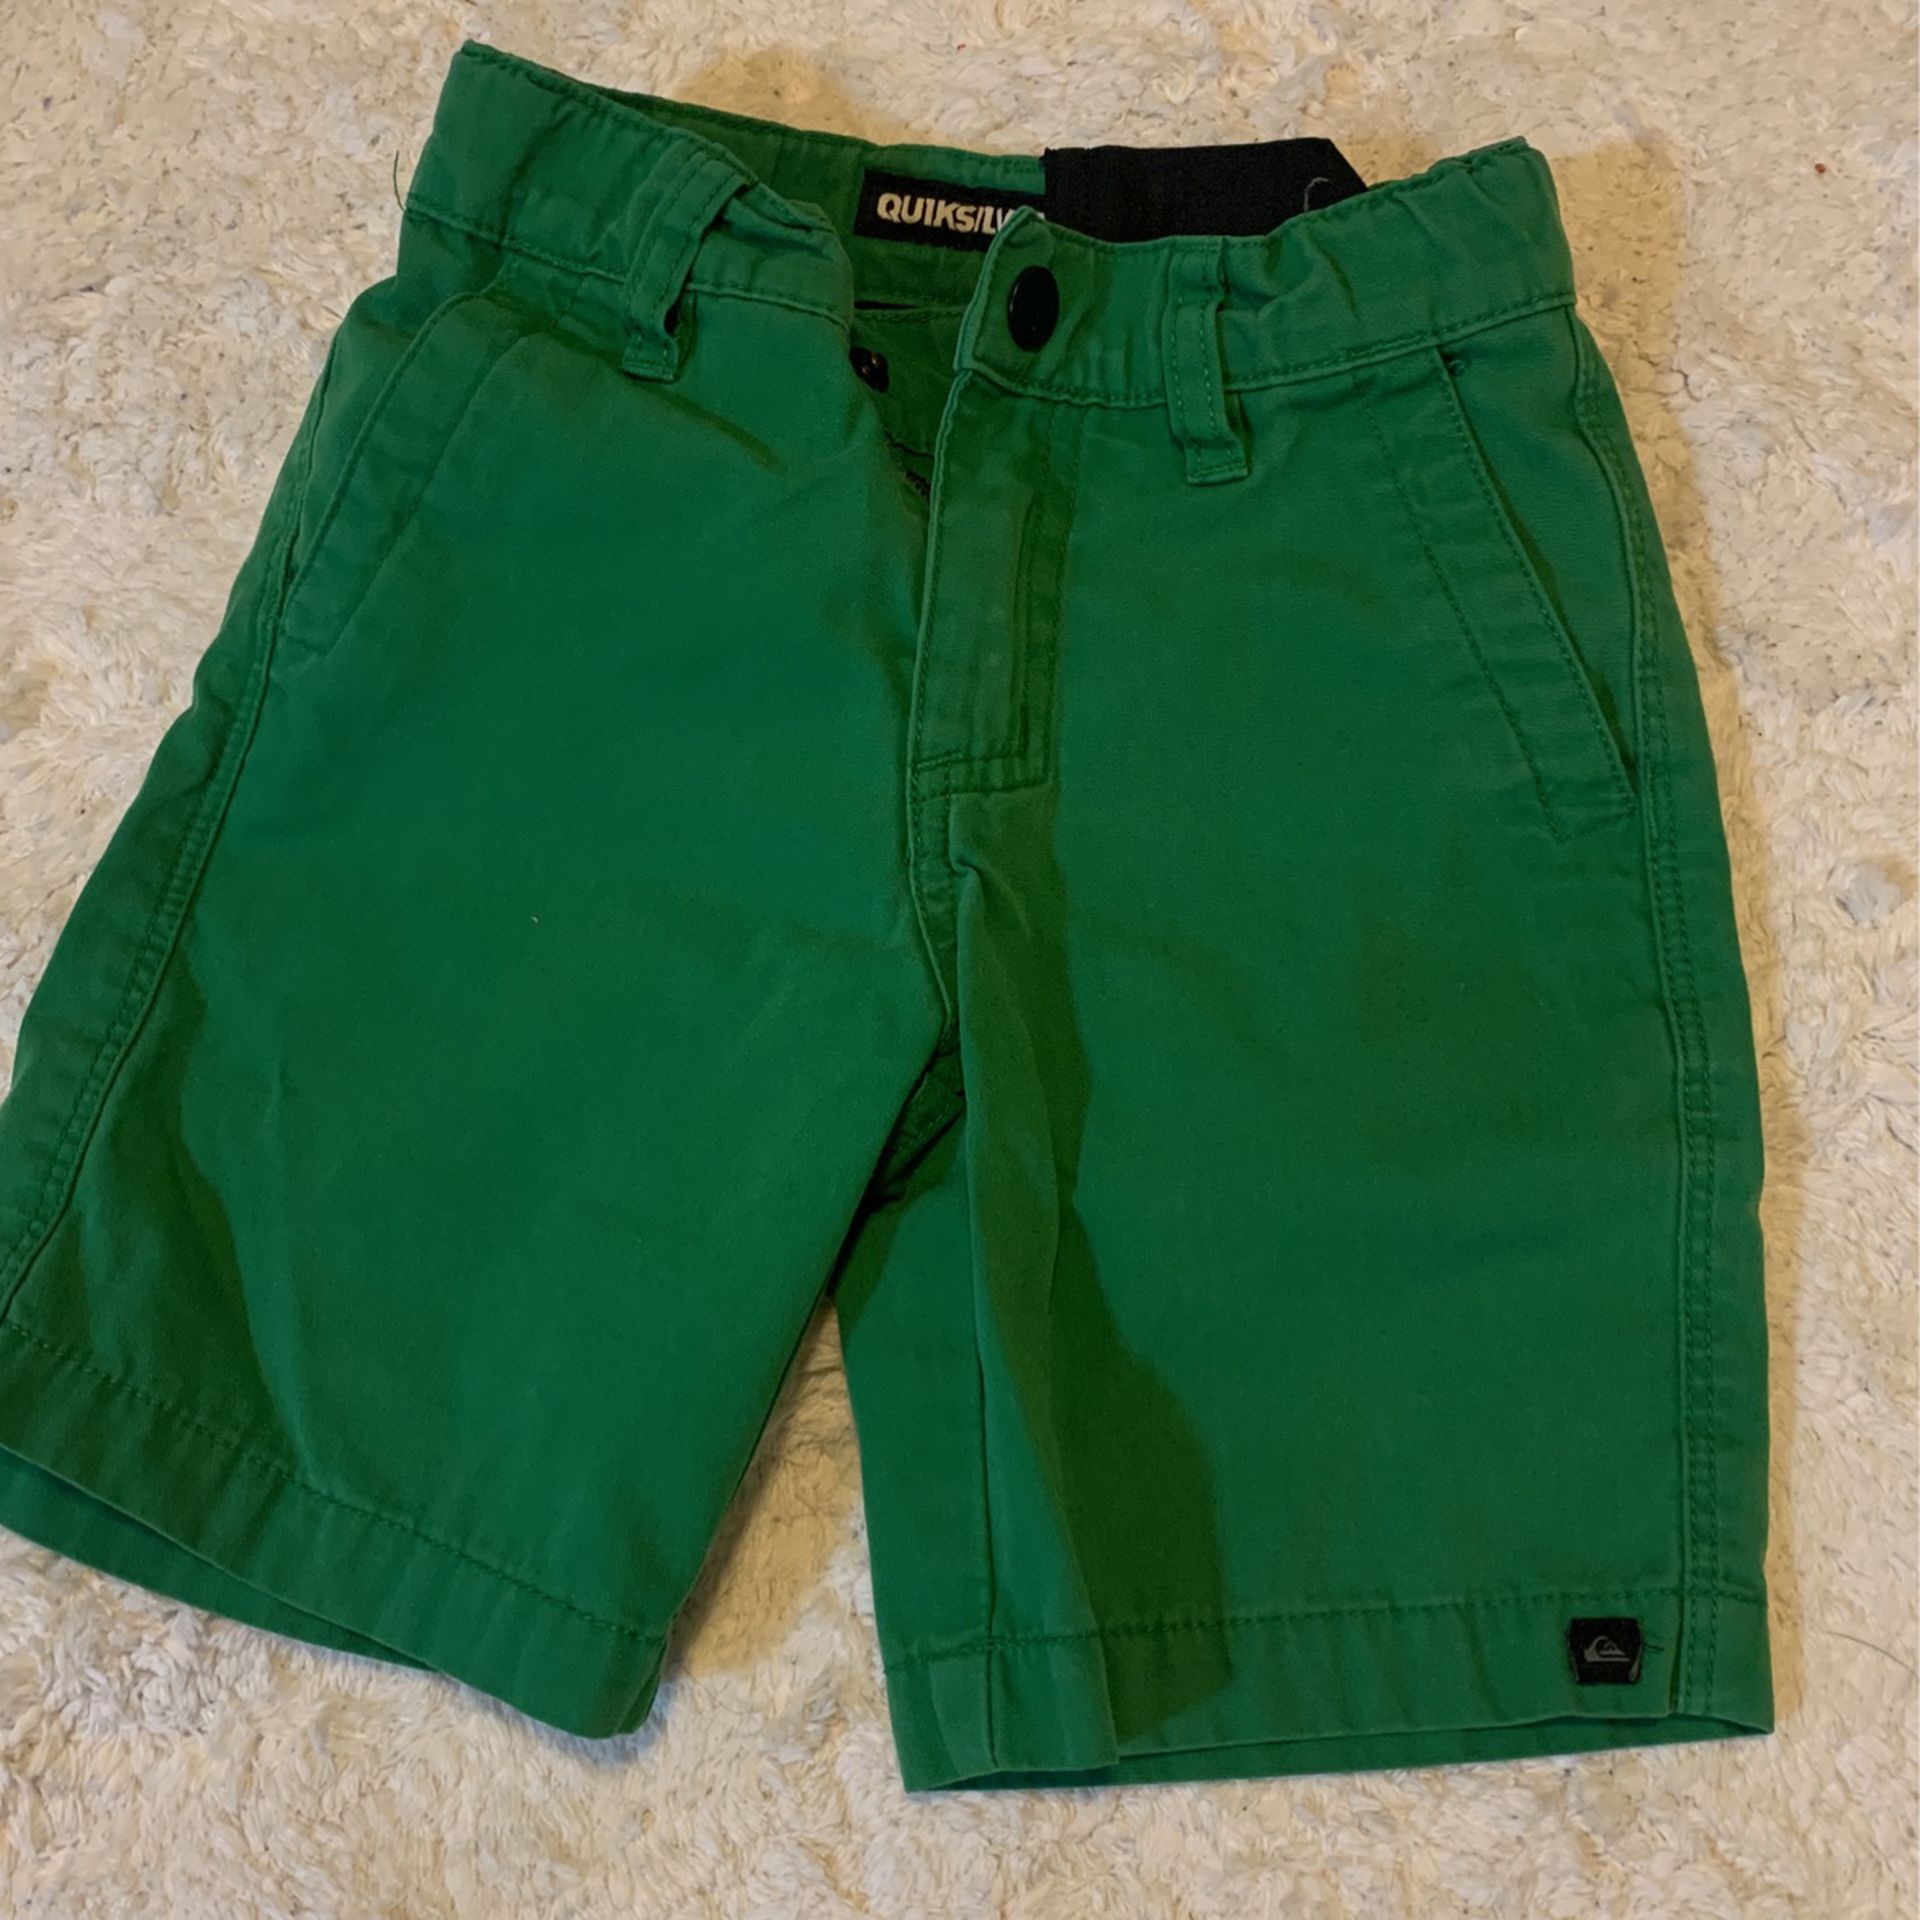 Green Quicksilver Shorts for Sale in Stockton, CA - OfferUp